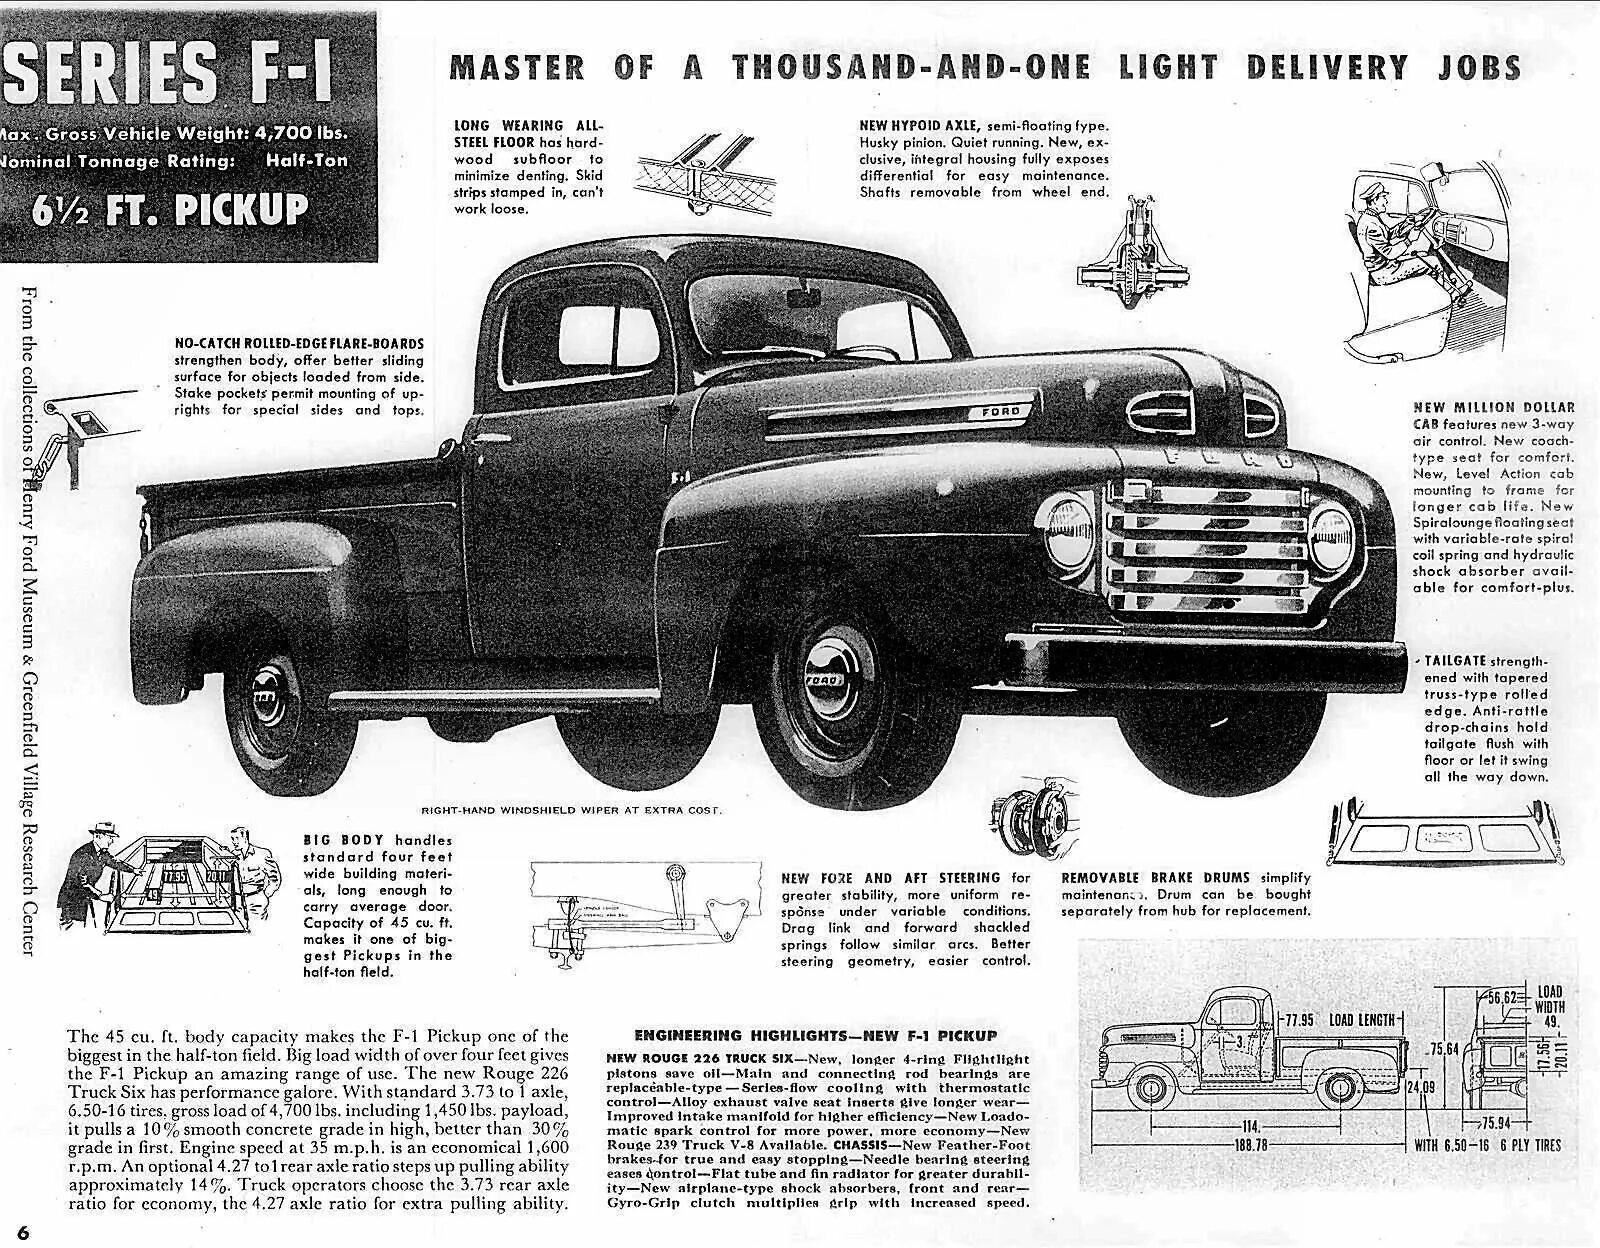 Реклама пикапа. Ford f1 Pickup 1948. Ford Truck 1948. Форд пикап 1948 реклама. Ford f1 1948 год.